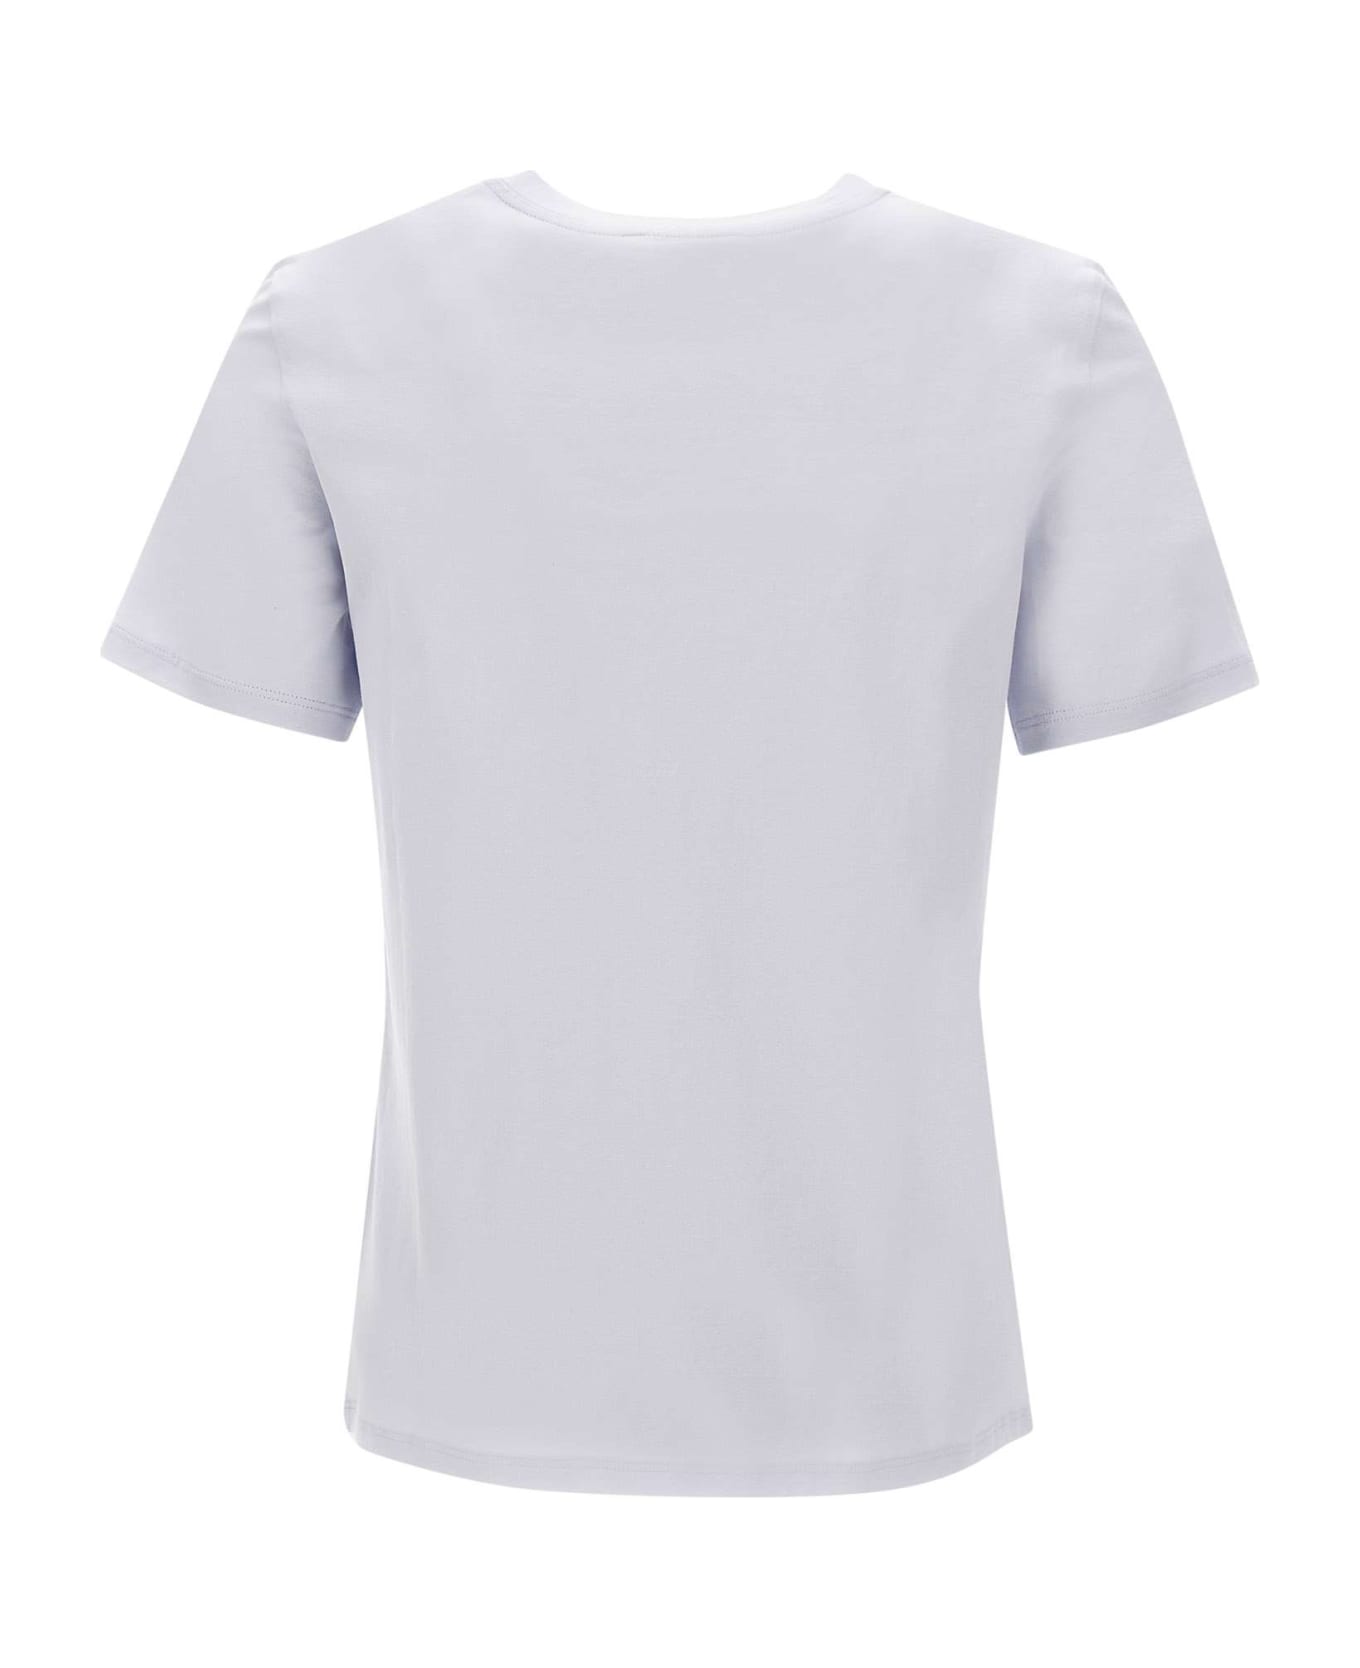 Theory "apex Tee" Pima Cotton T-shirt - GREY